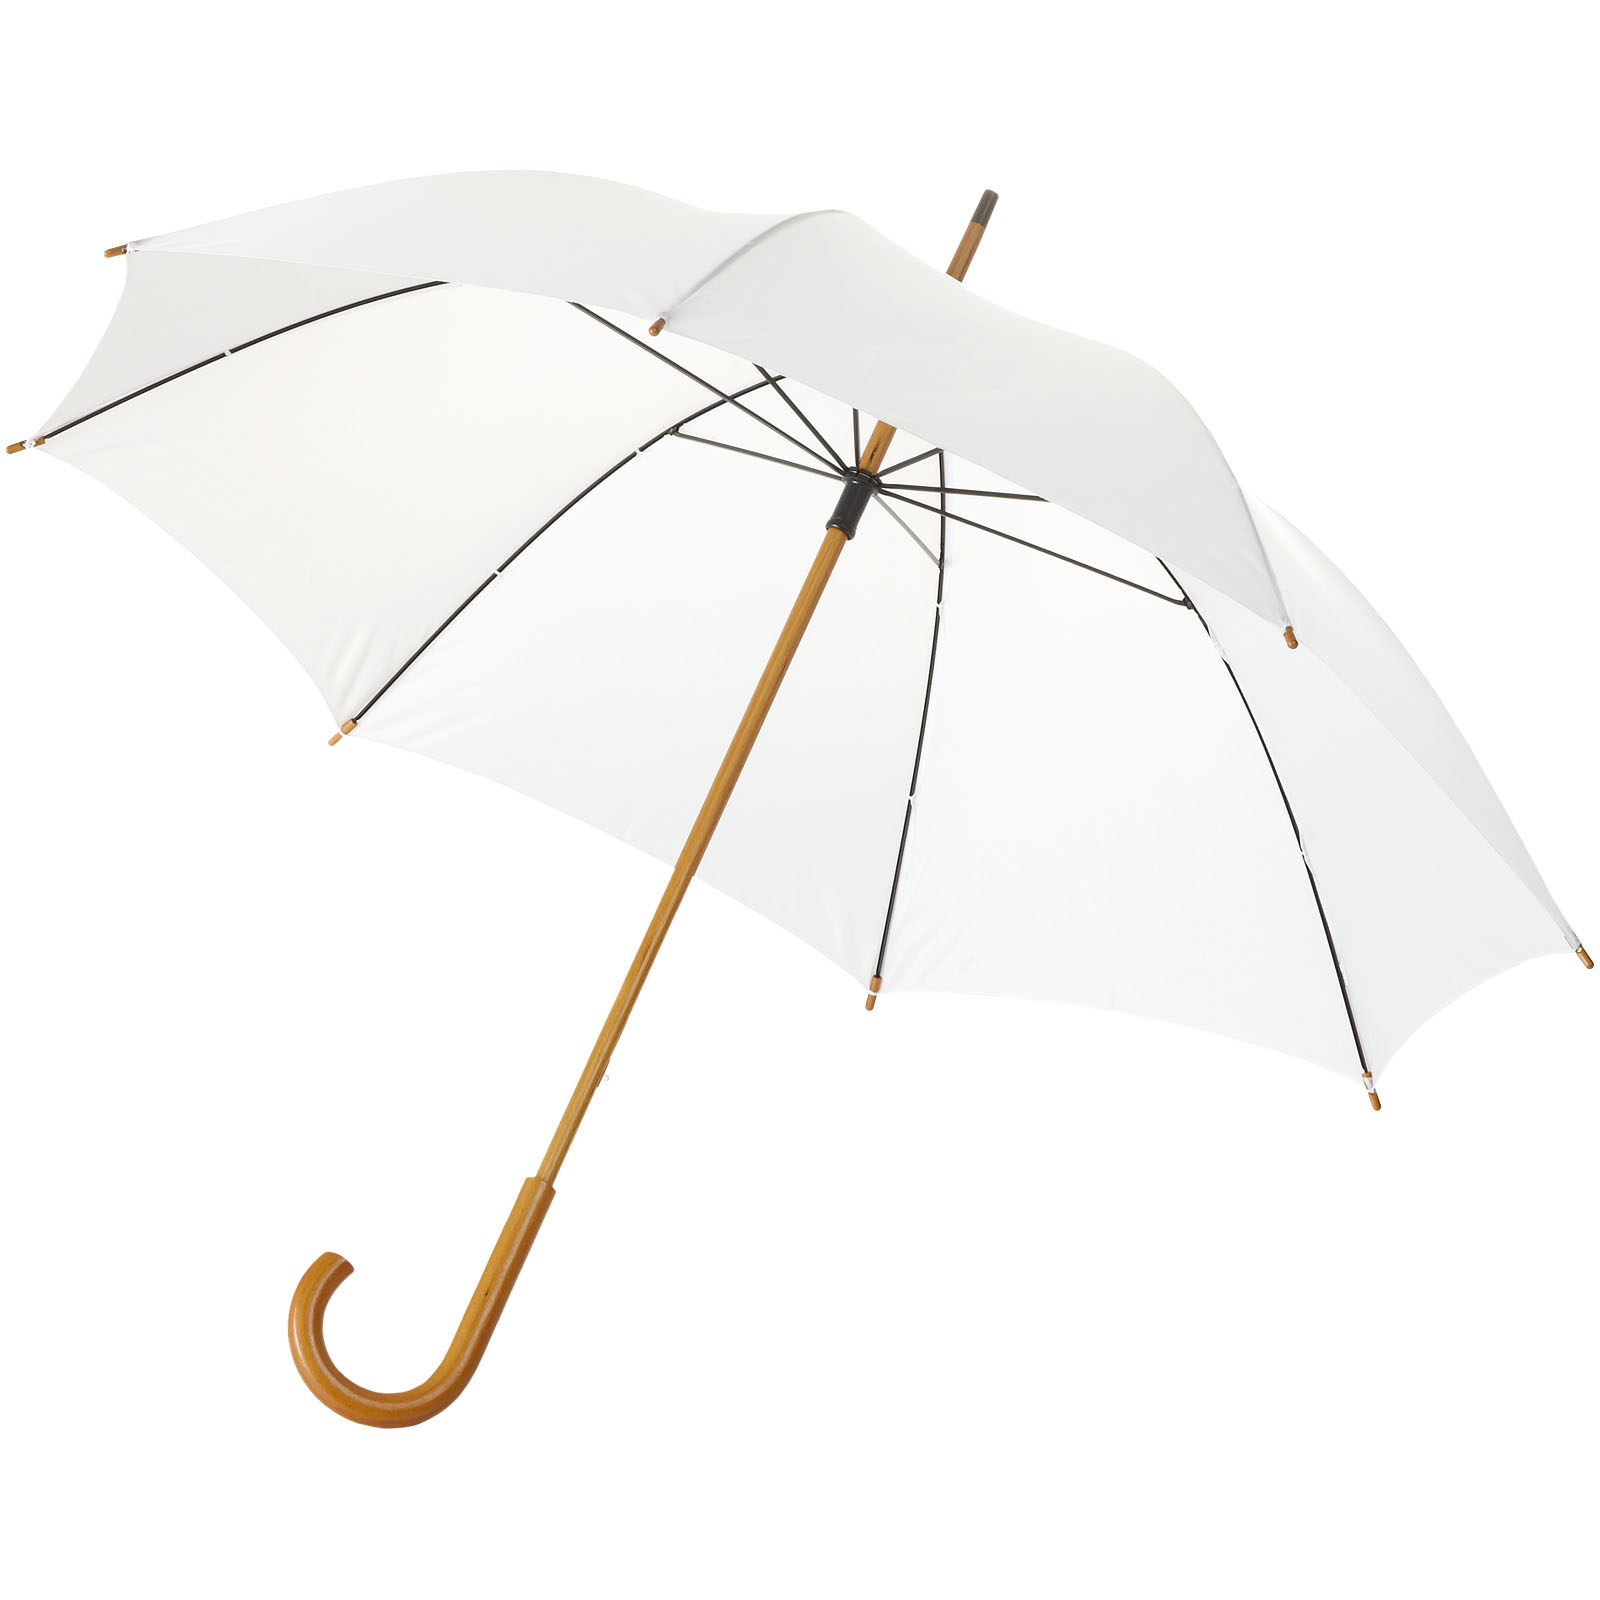 Paraguas Jova de 23" con eje y mango de madera - Abbots Langley - Andújar